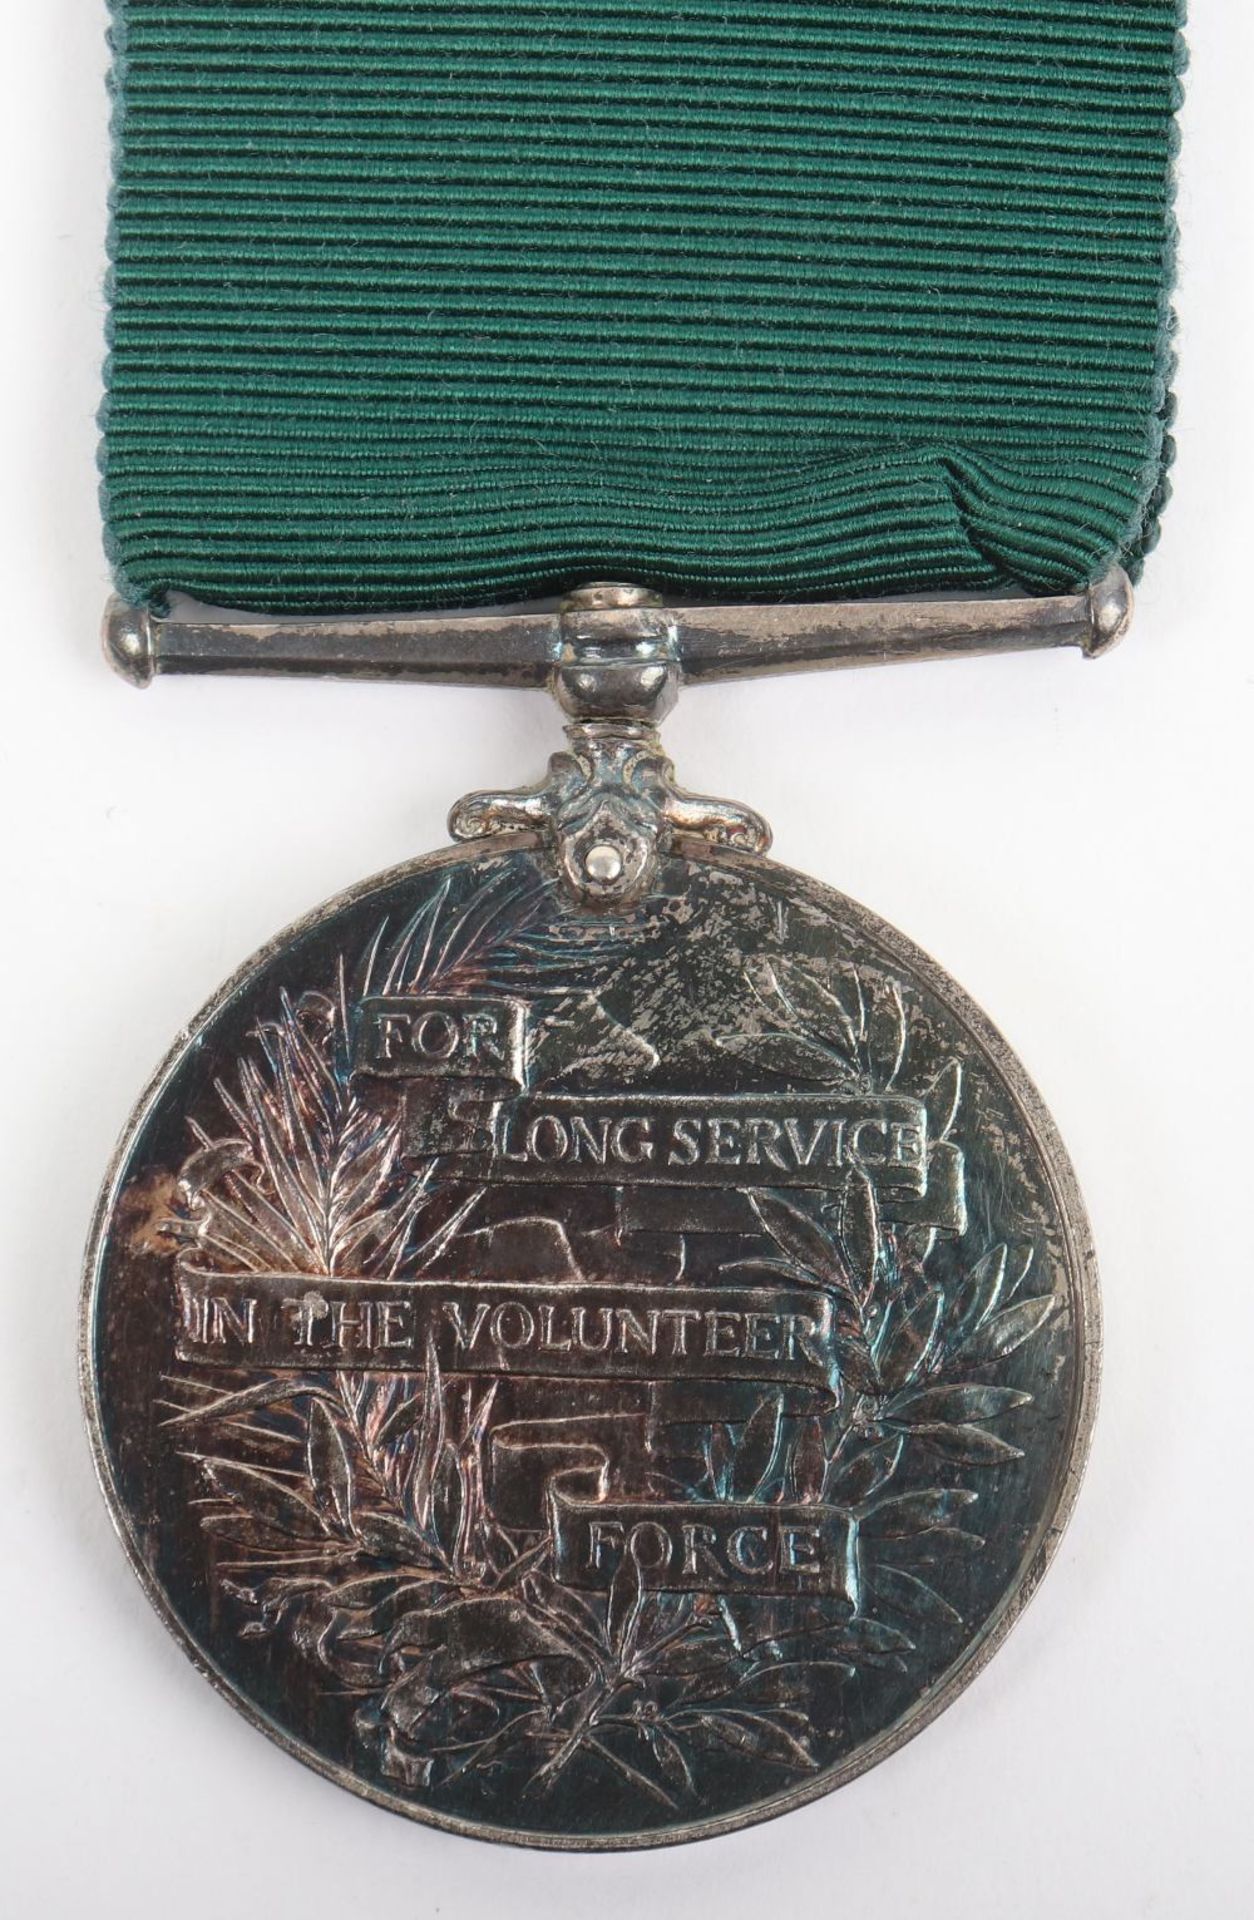 Edward VII Volunteer Force Long Service Medal 8th Lancashire Royal Garrison Artillery Volunteers - Image 3 of 3